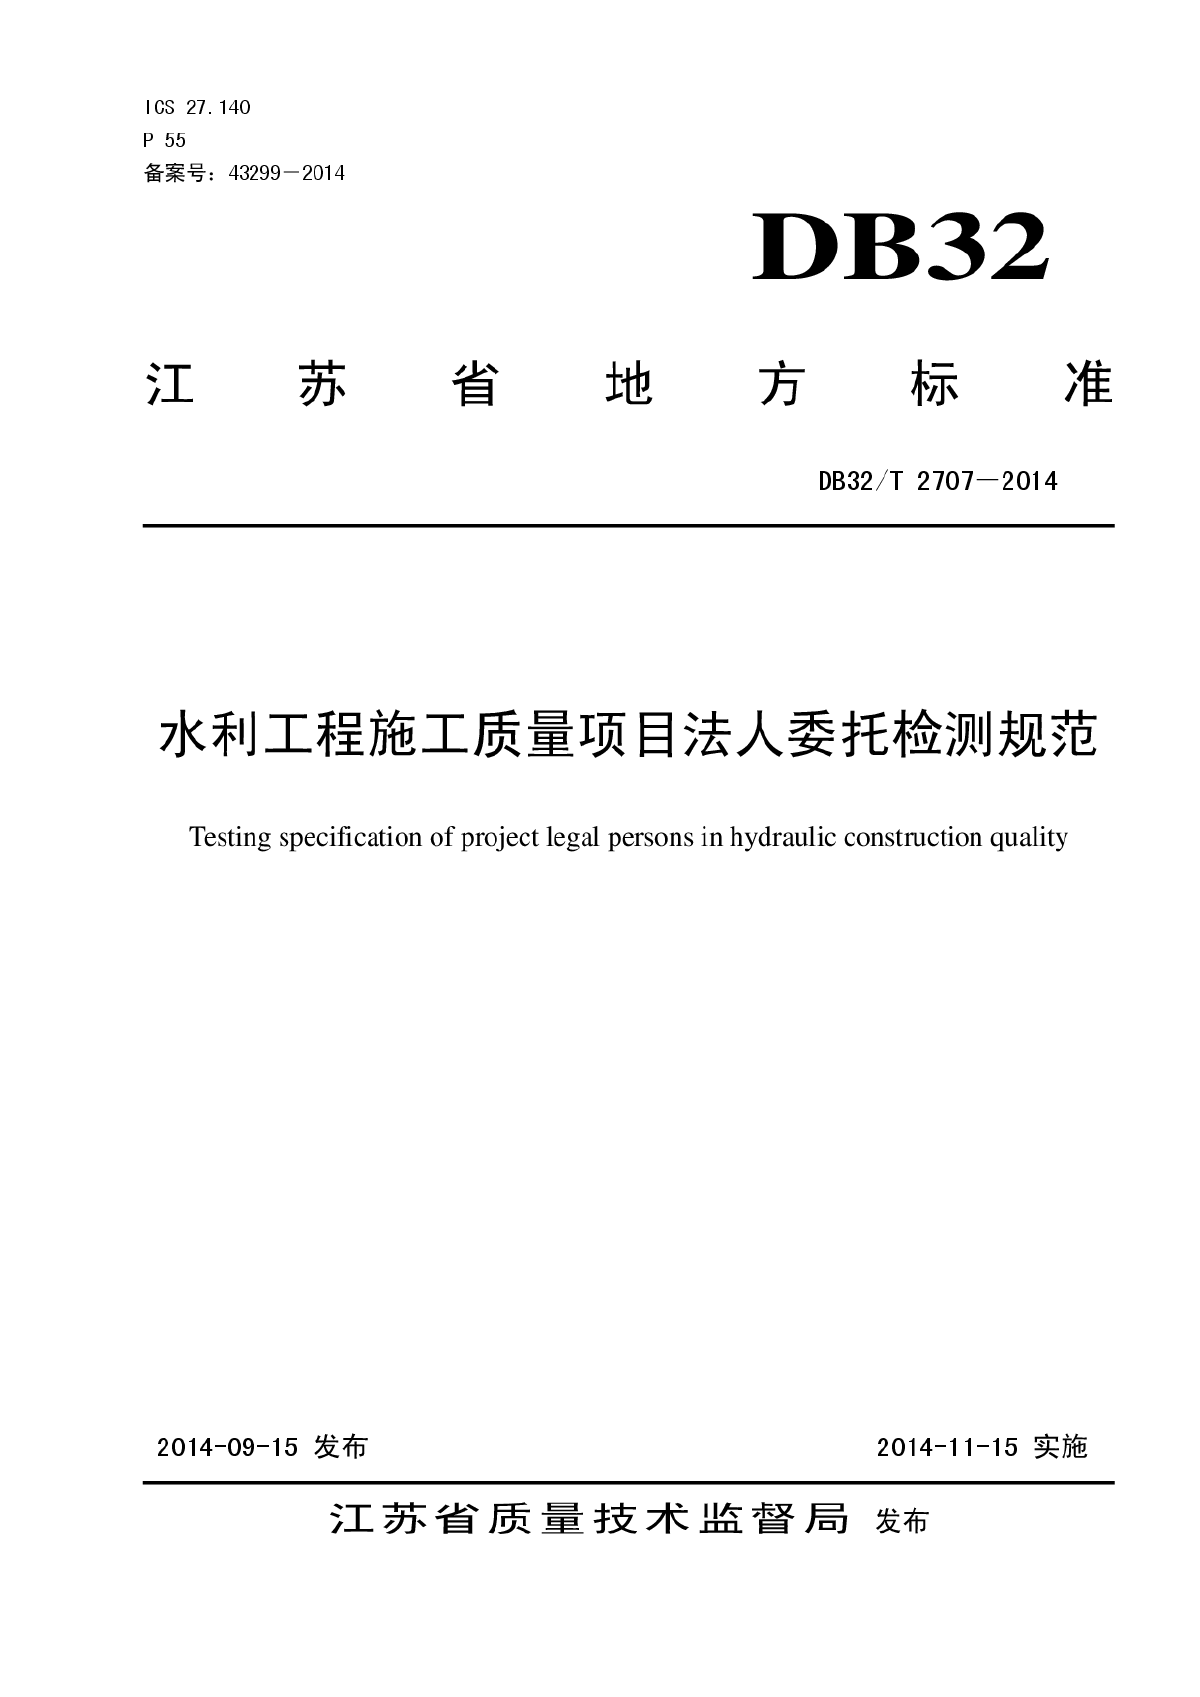 DB32T2707-2014水利工程施工质量项目法人委托检测规范